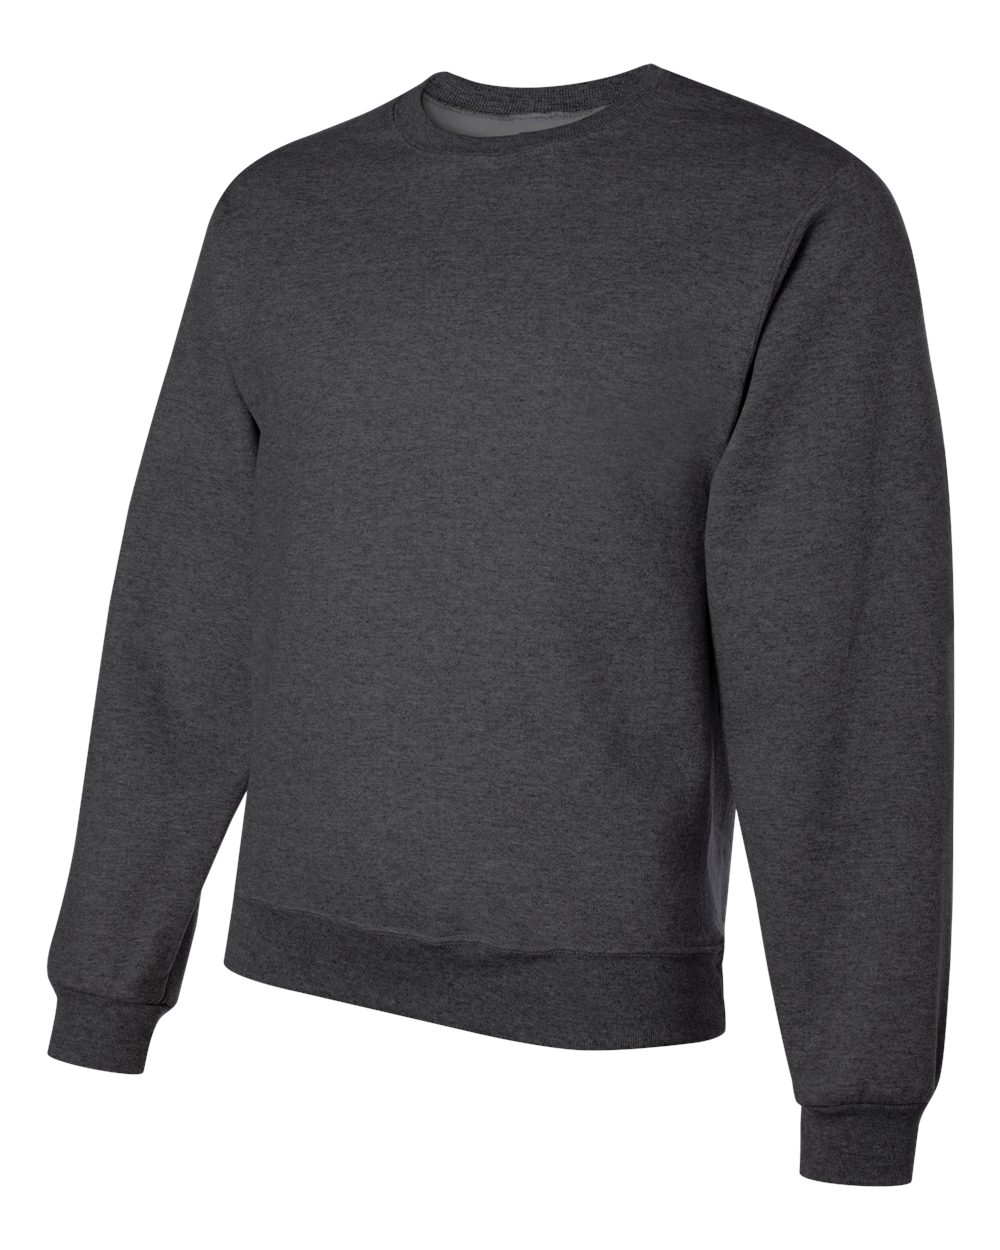 JERZEES 562MR - NuBlend Crewneck Sweatshirt $9.64 - Gifts 10 and Under